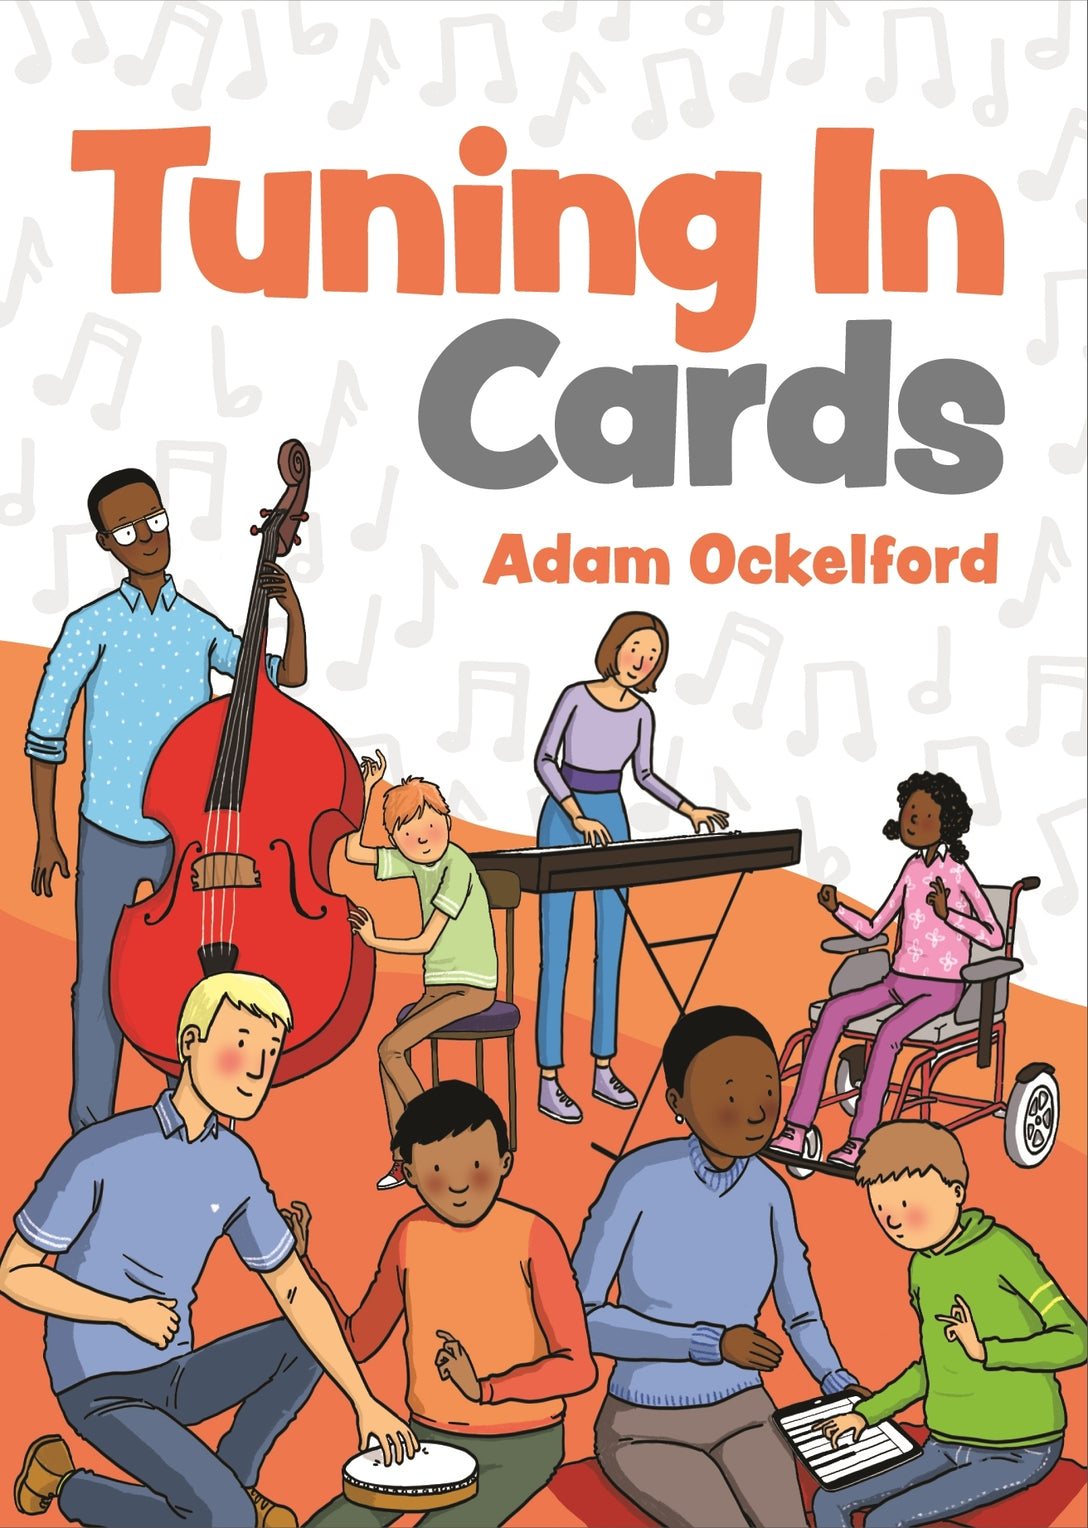 Tuning In Cards by Adam Ockelford